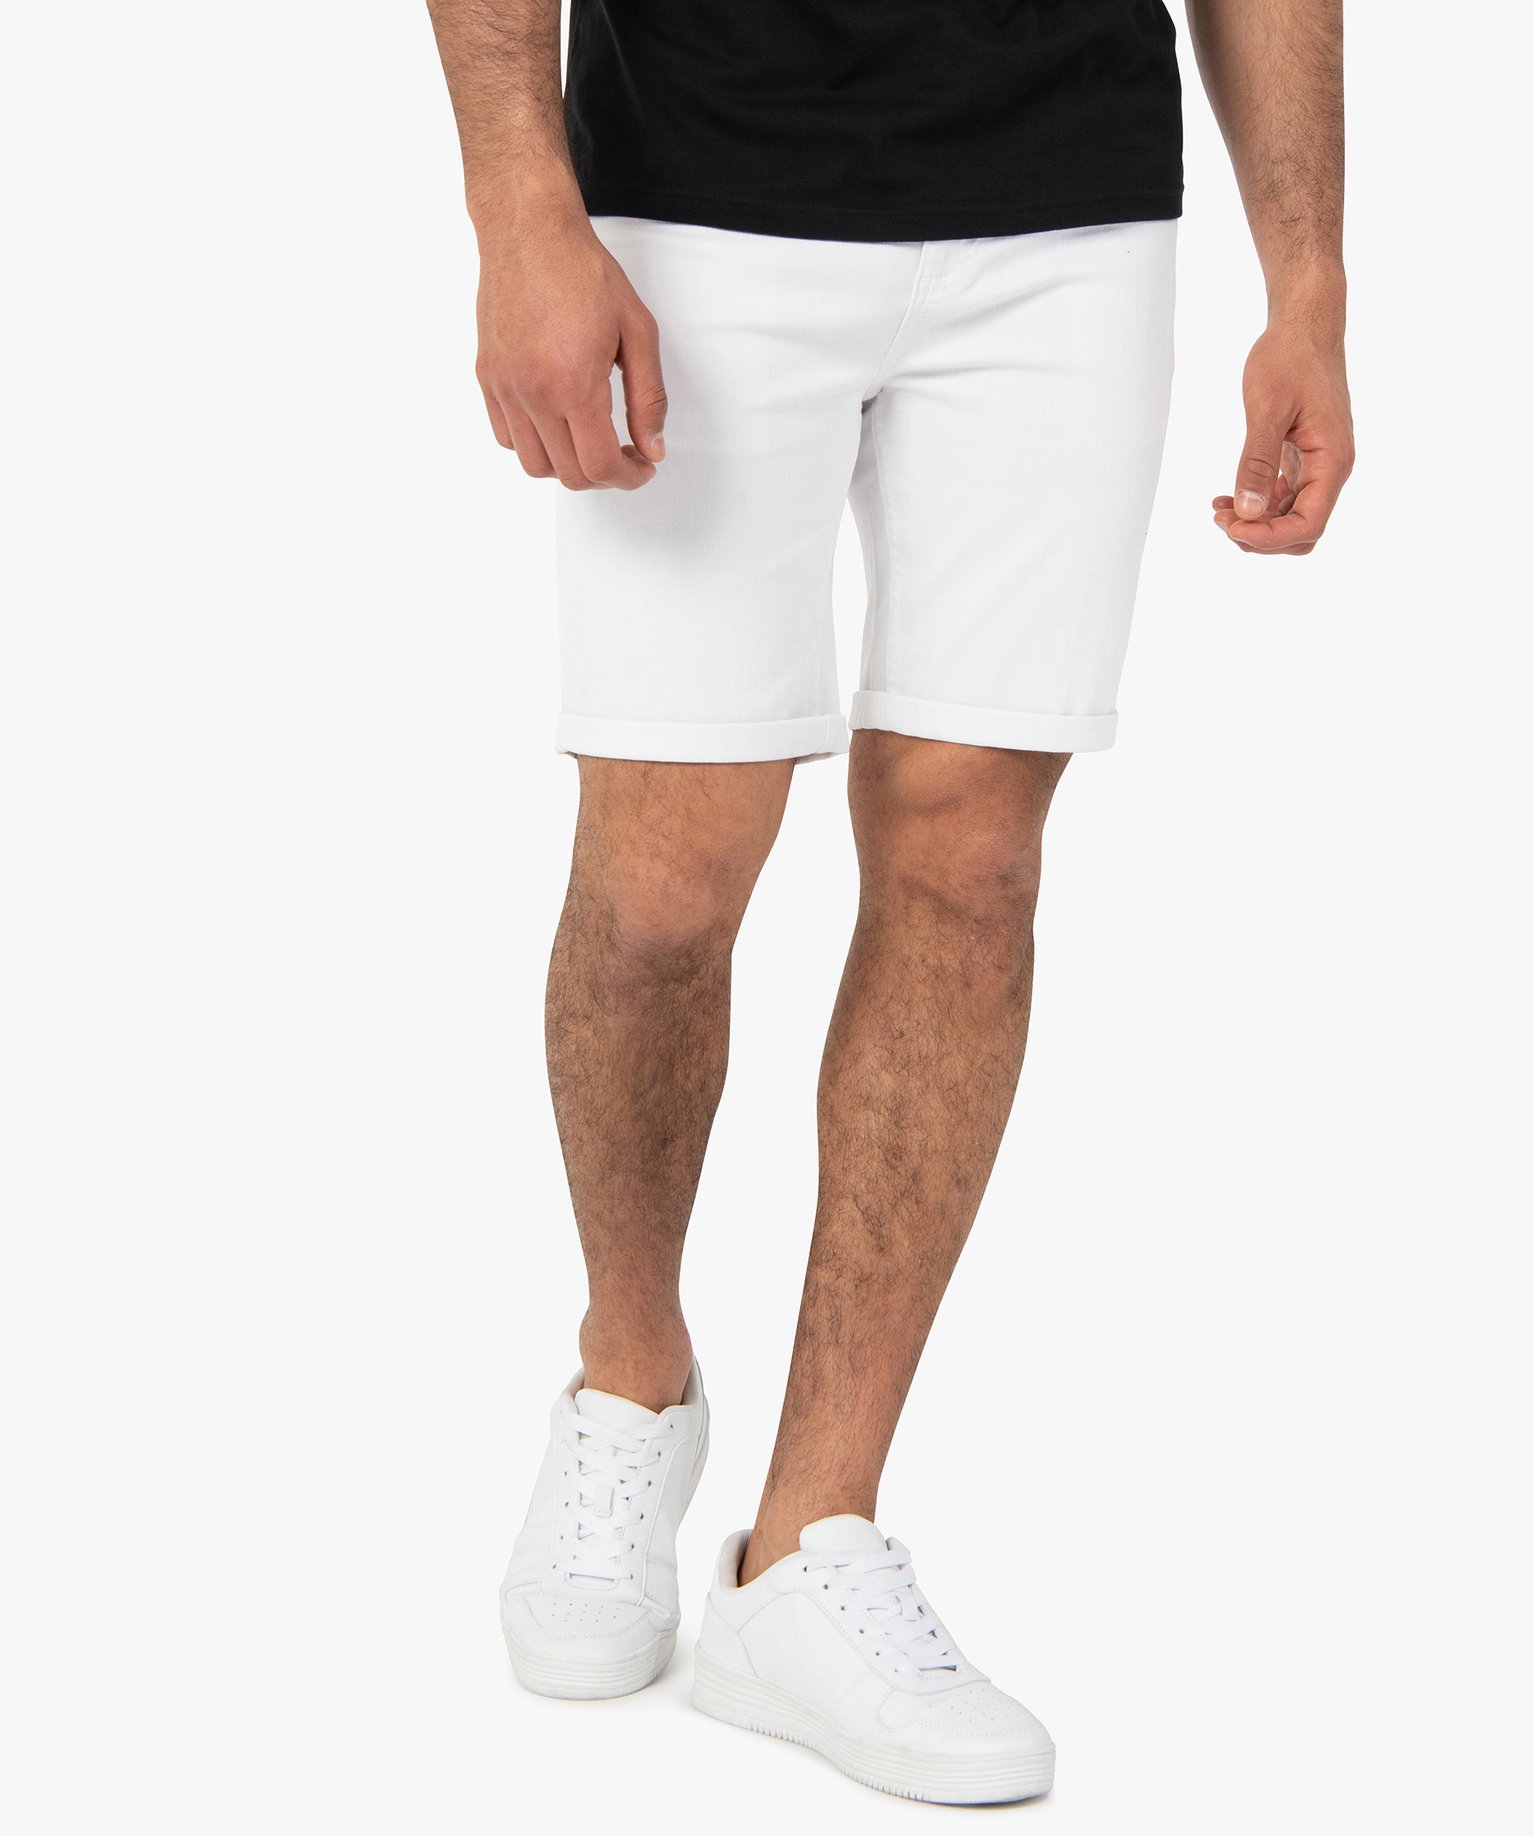 bermuda homme en coton extensible aspect jean blanc